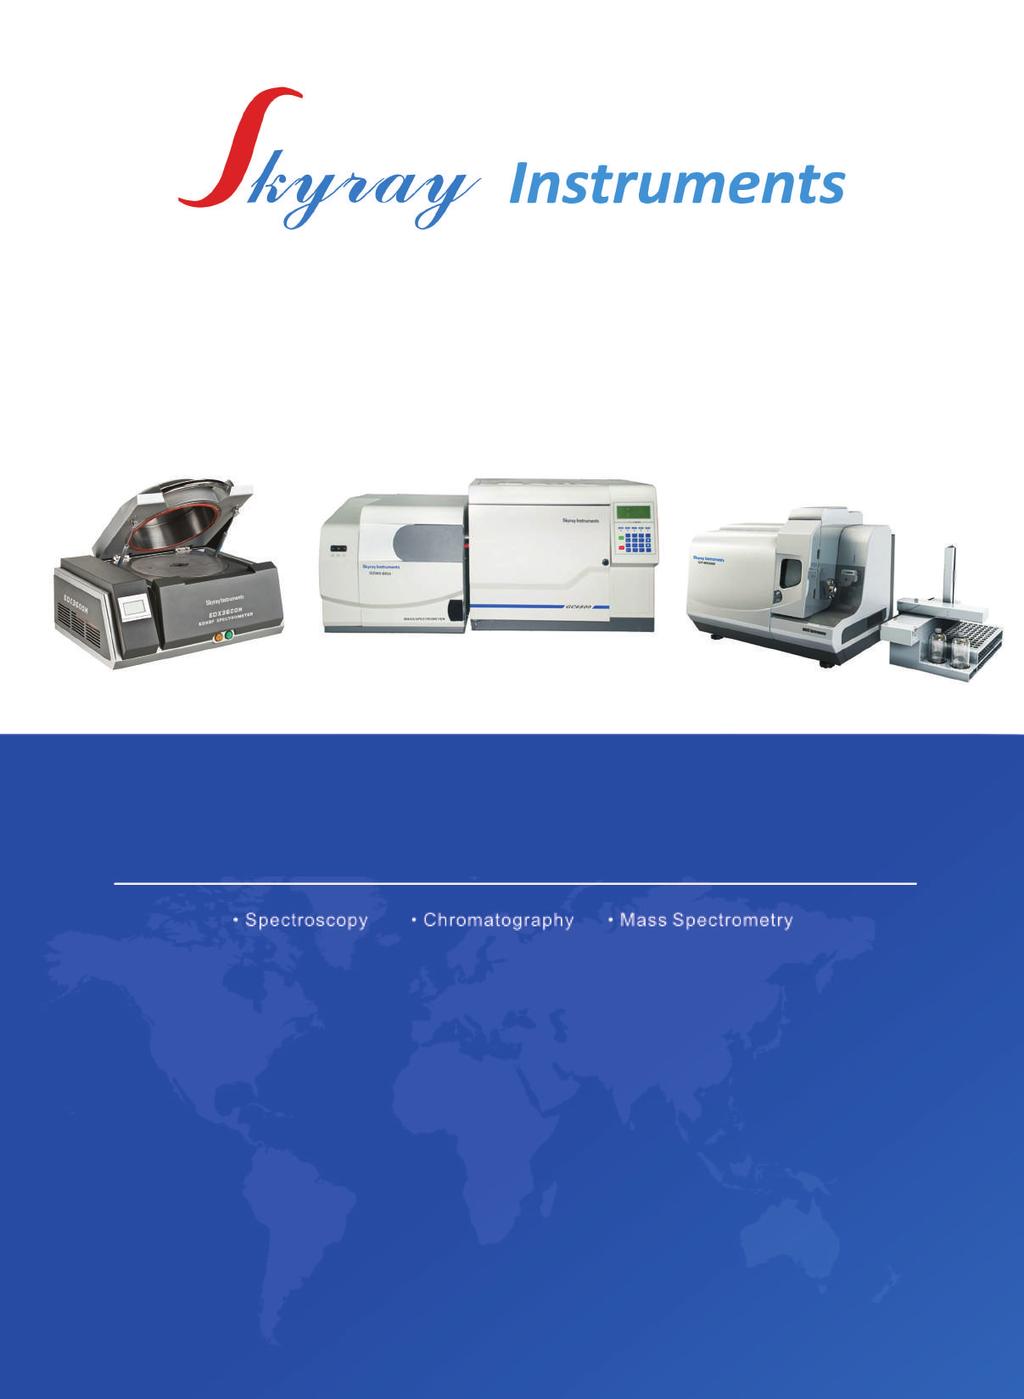 Skyray Instruments USA, Inc 1717 N. Akard Street, Ste 2520 Dallas, Texas, 75201 USA +1 972 638 9035 sales@skyrayinstruments.